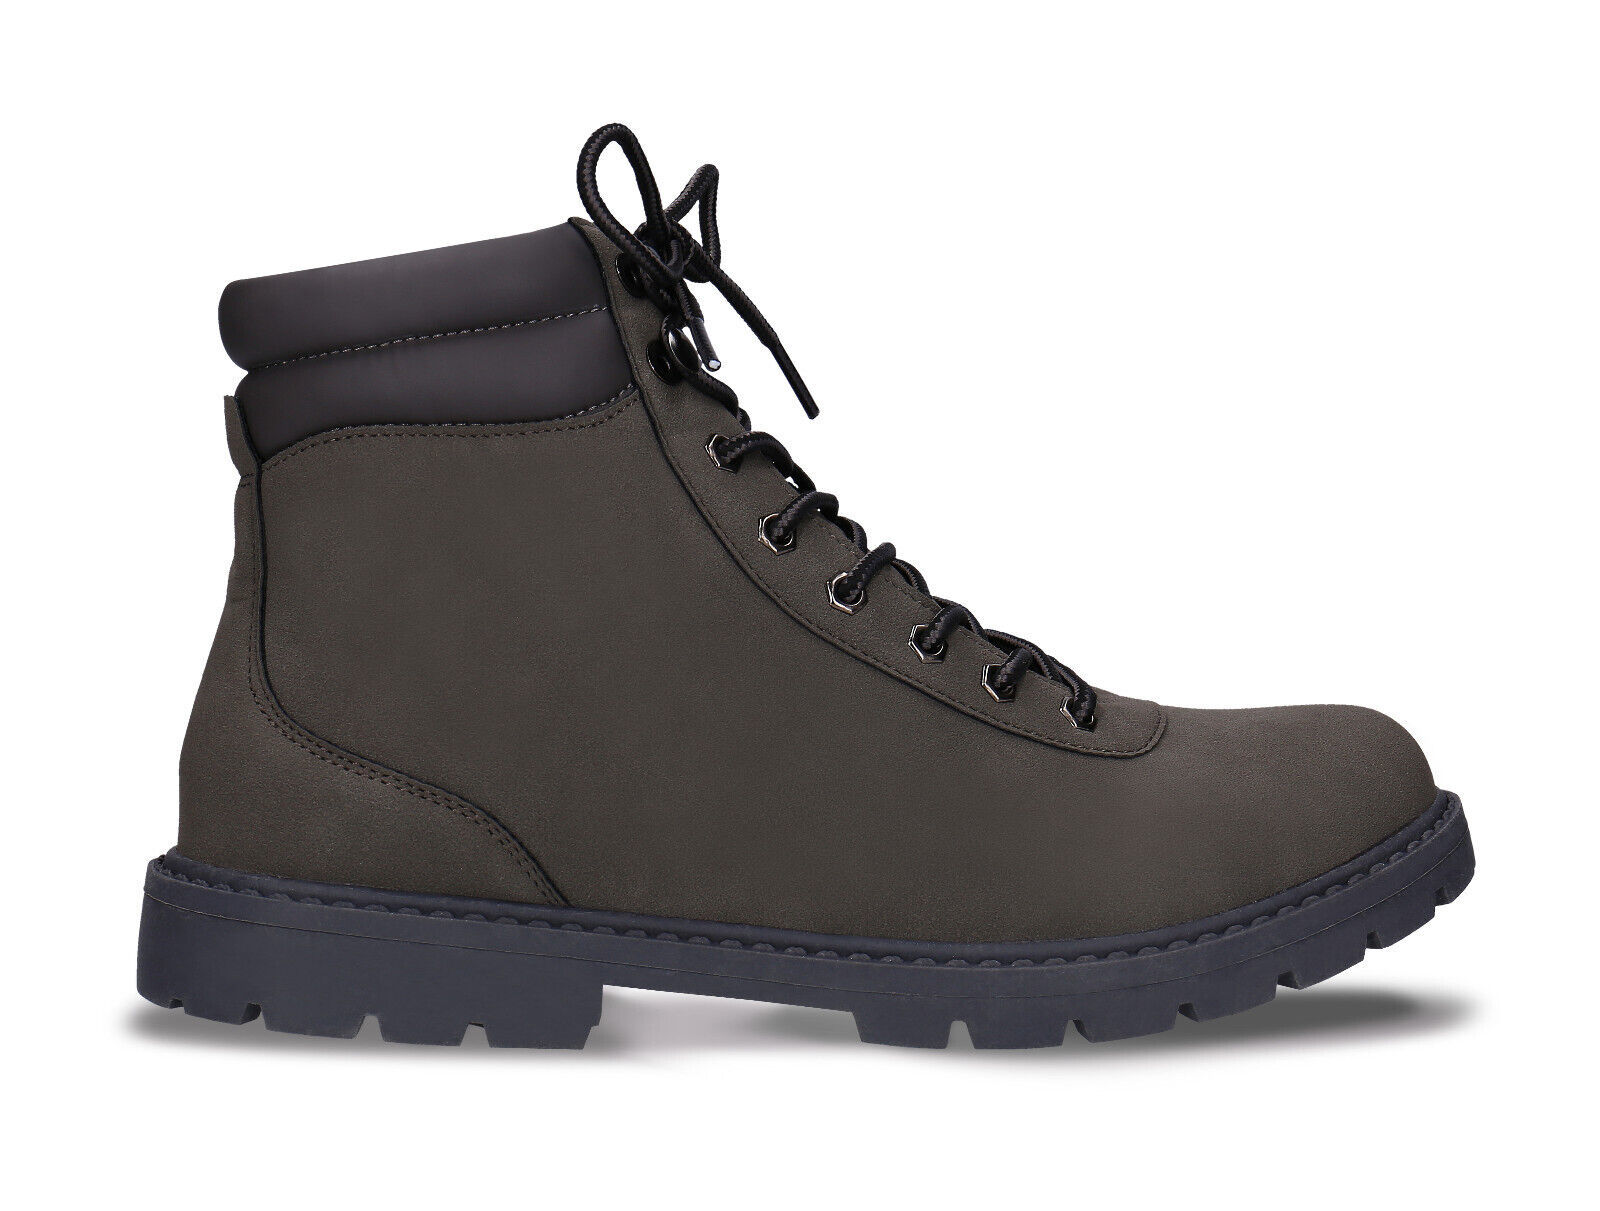 Vegan boots hiking mountain trekking winter ankle collar padded suede-like grey - $145.25